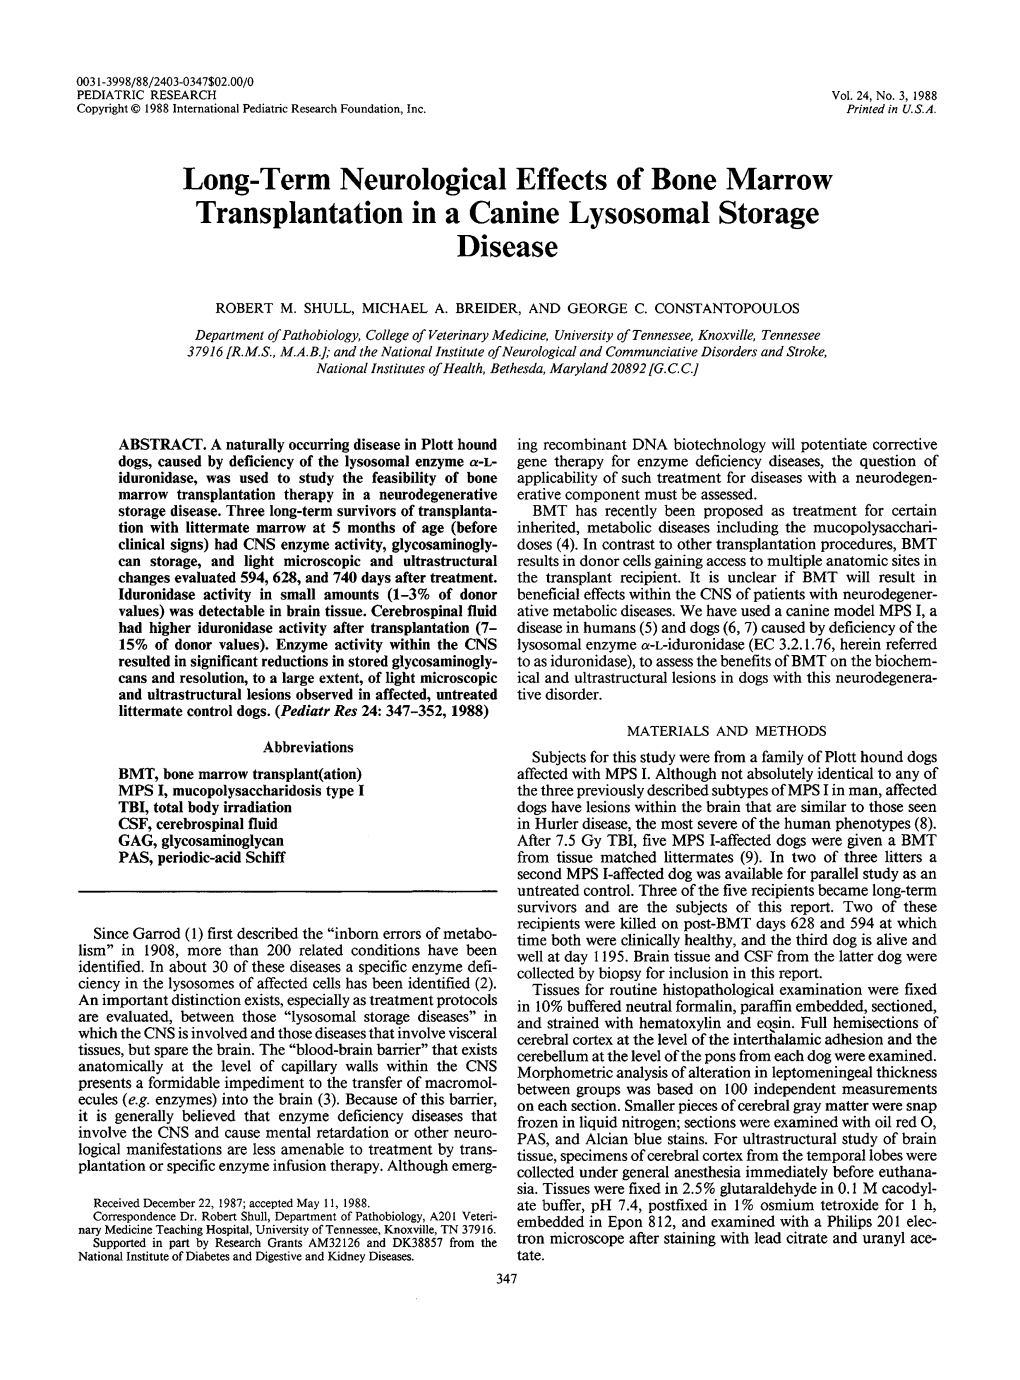 Long-Term Neurological Effects of Bone Marrow Transplantation in a Canine Lysosomal Storage Disease